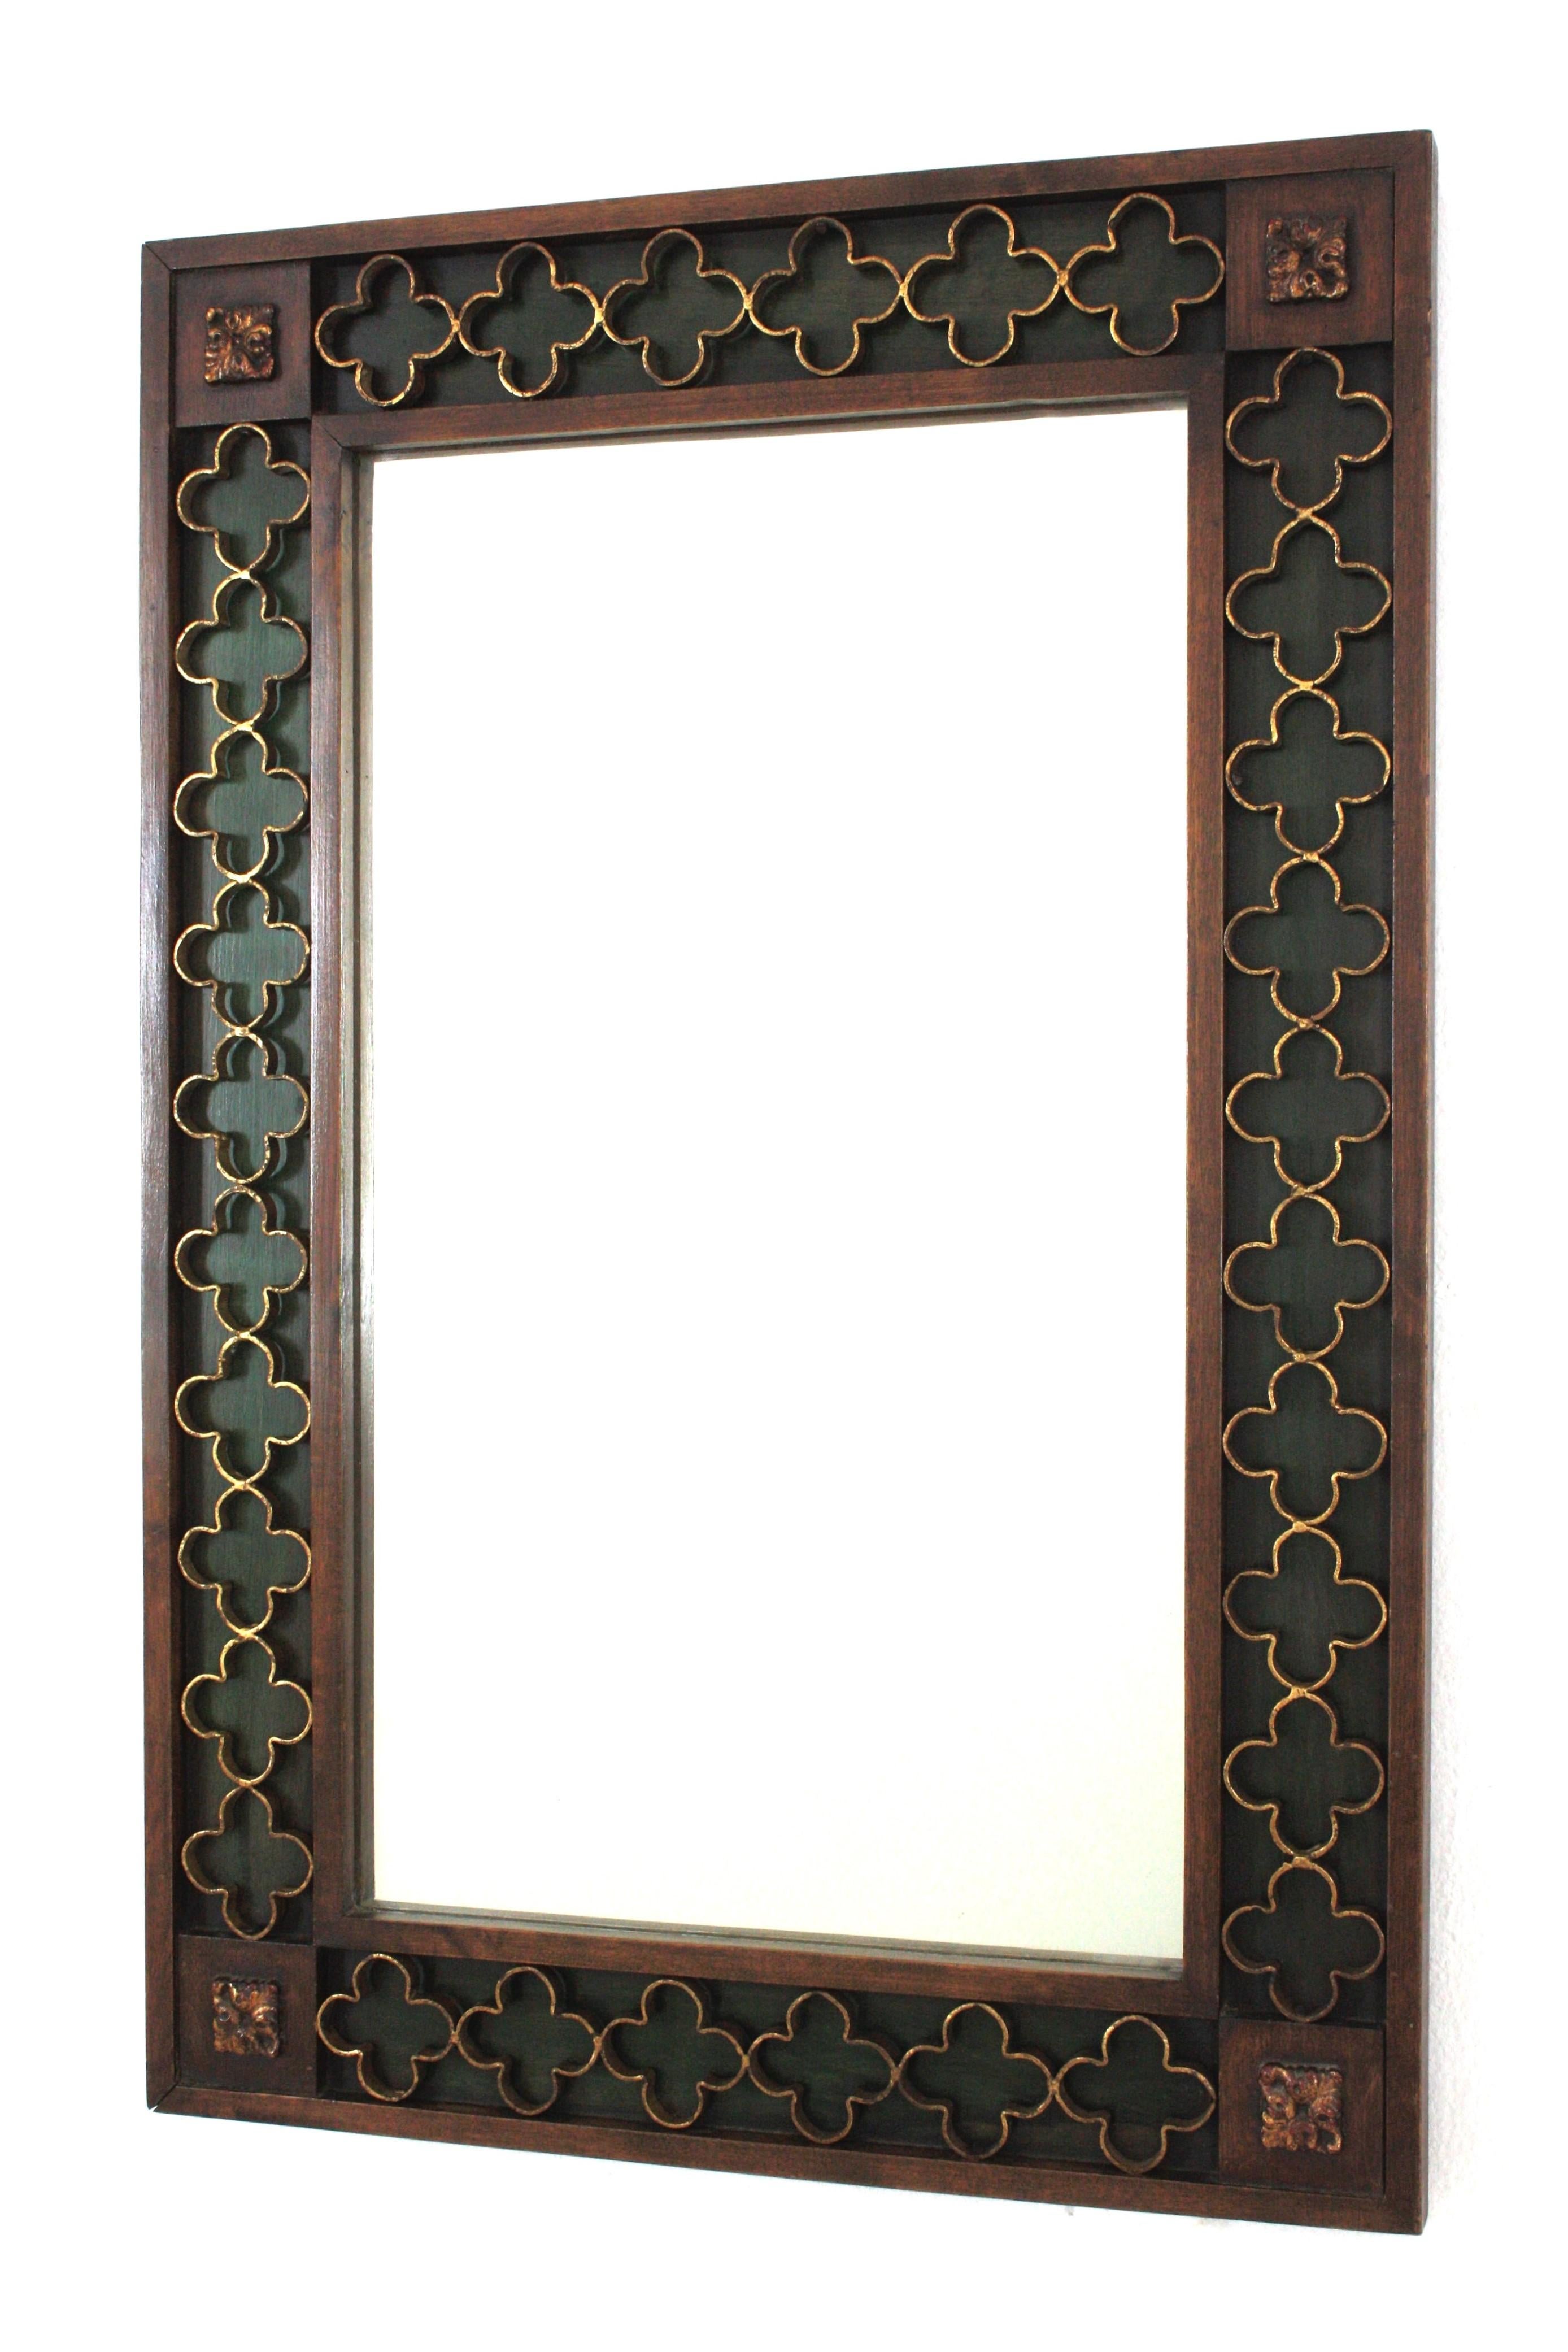 Spanish Colonial Spanish Revival Rectangular Mirror with Gilt Iron Rosettes Frame